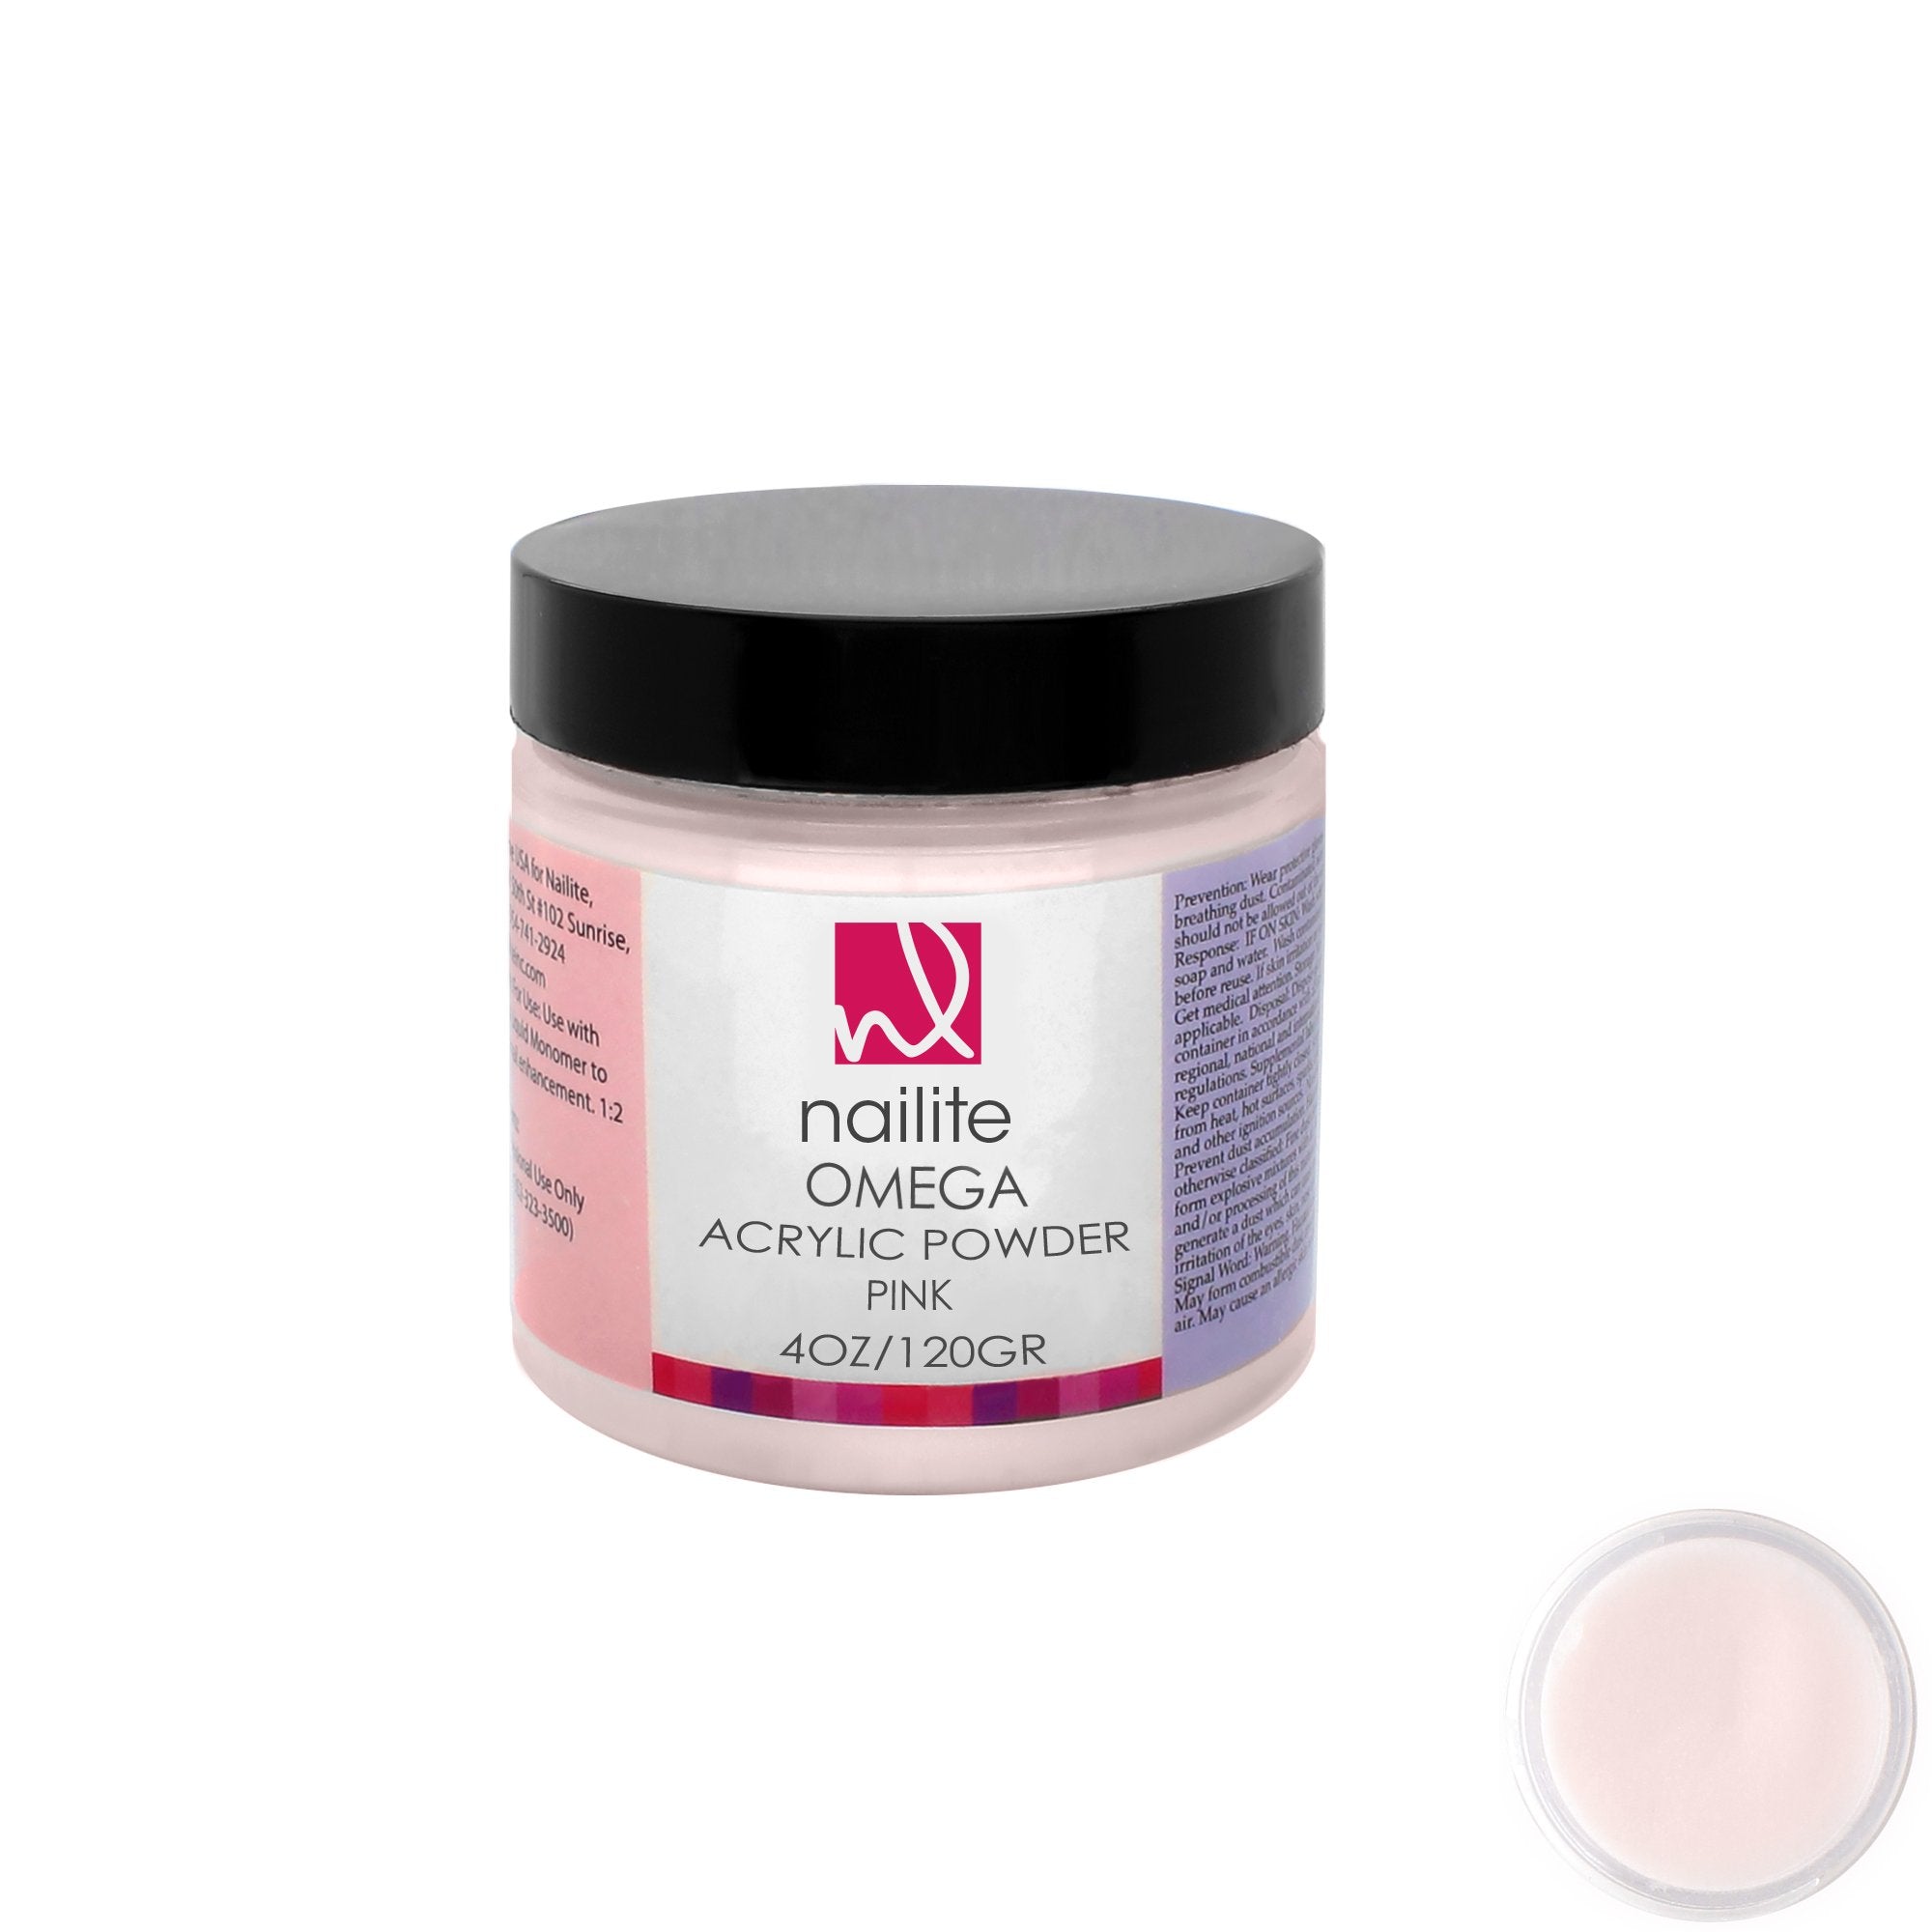 omega_acrylicpowder_pink_4oz_d73e83af-1808-4787-bee9-b8a32d14f266.jpg